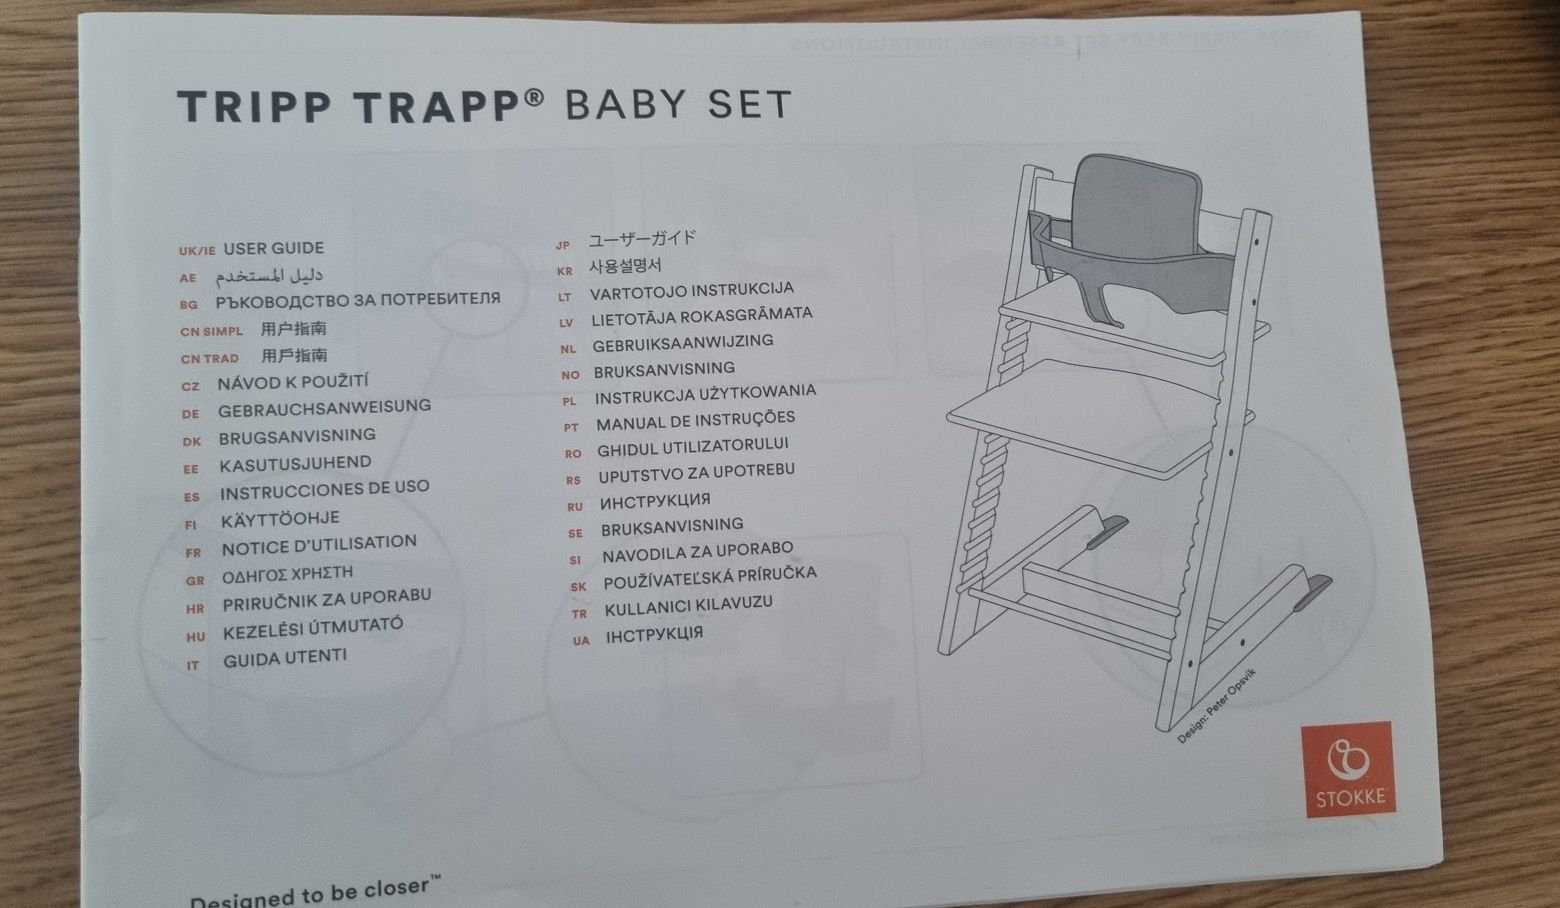 Tripp trapp baby sad